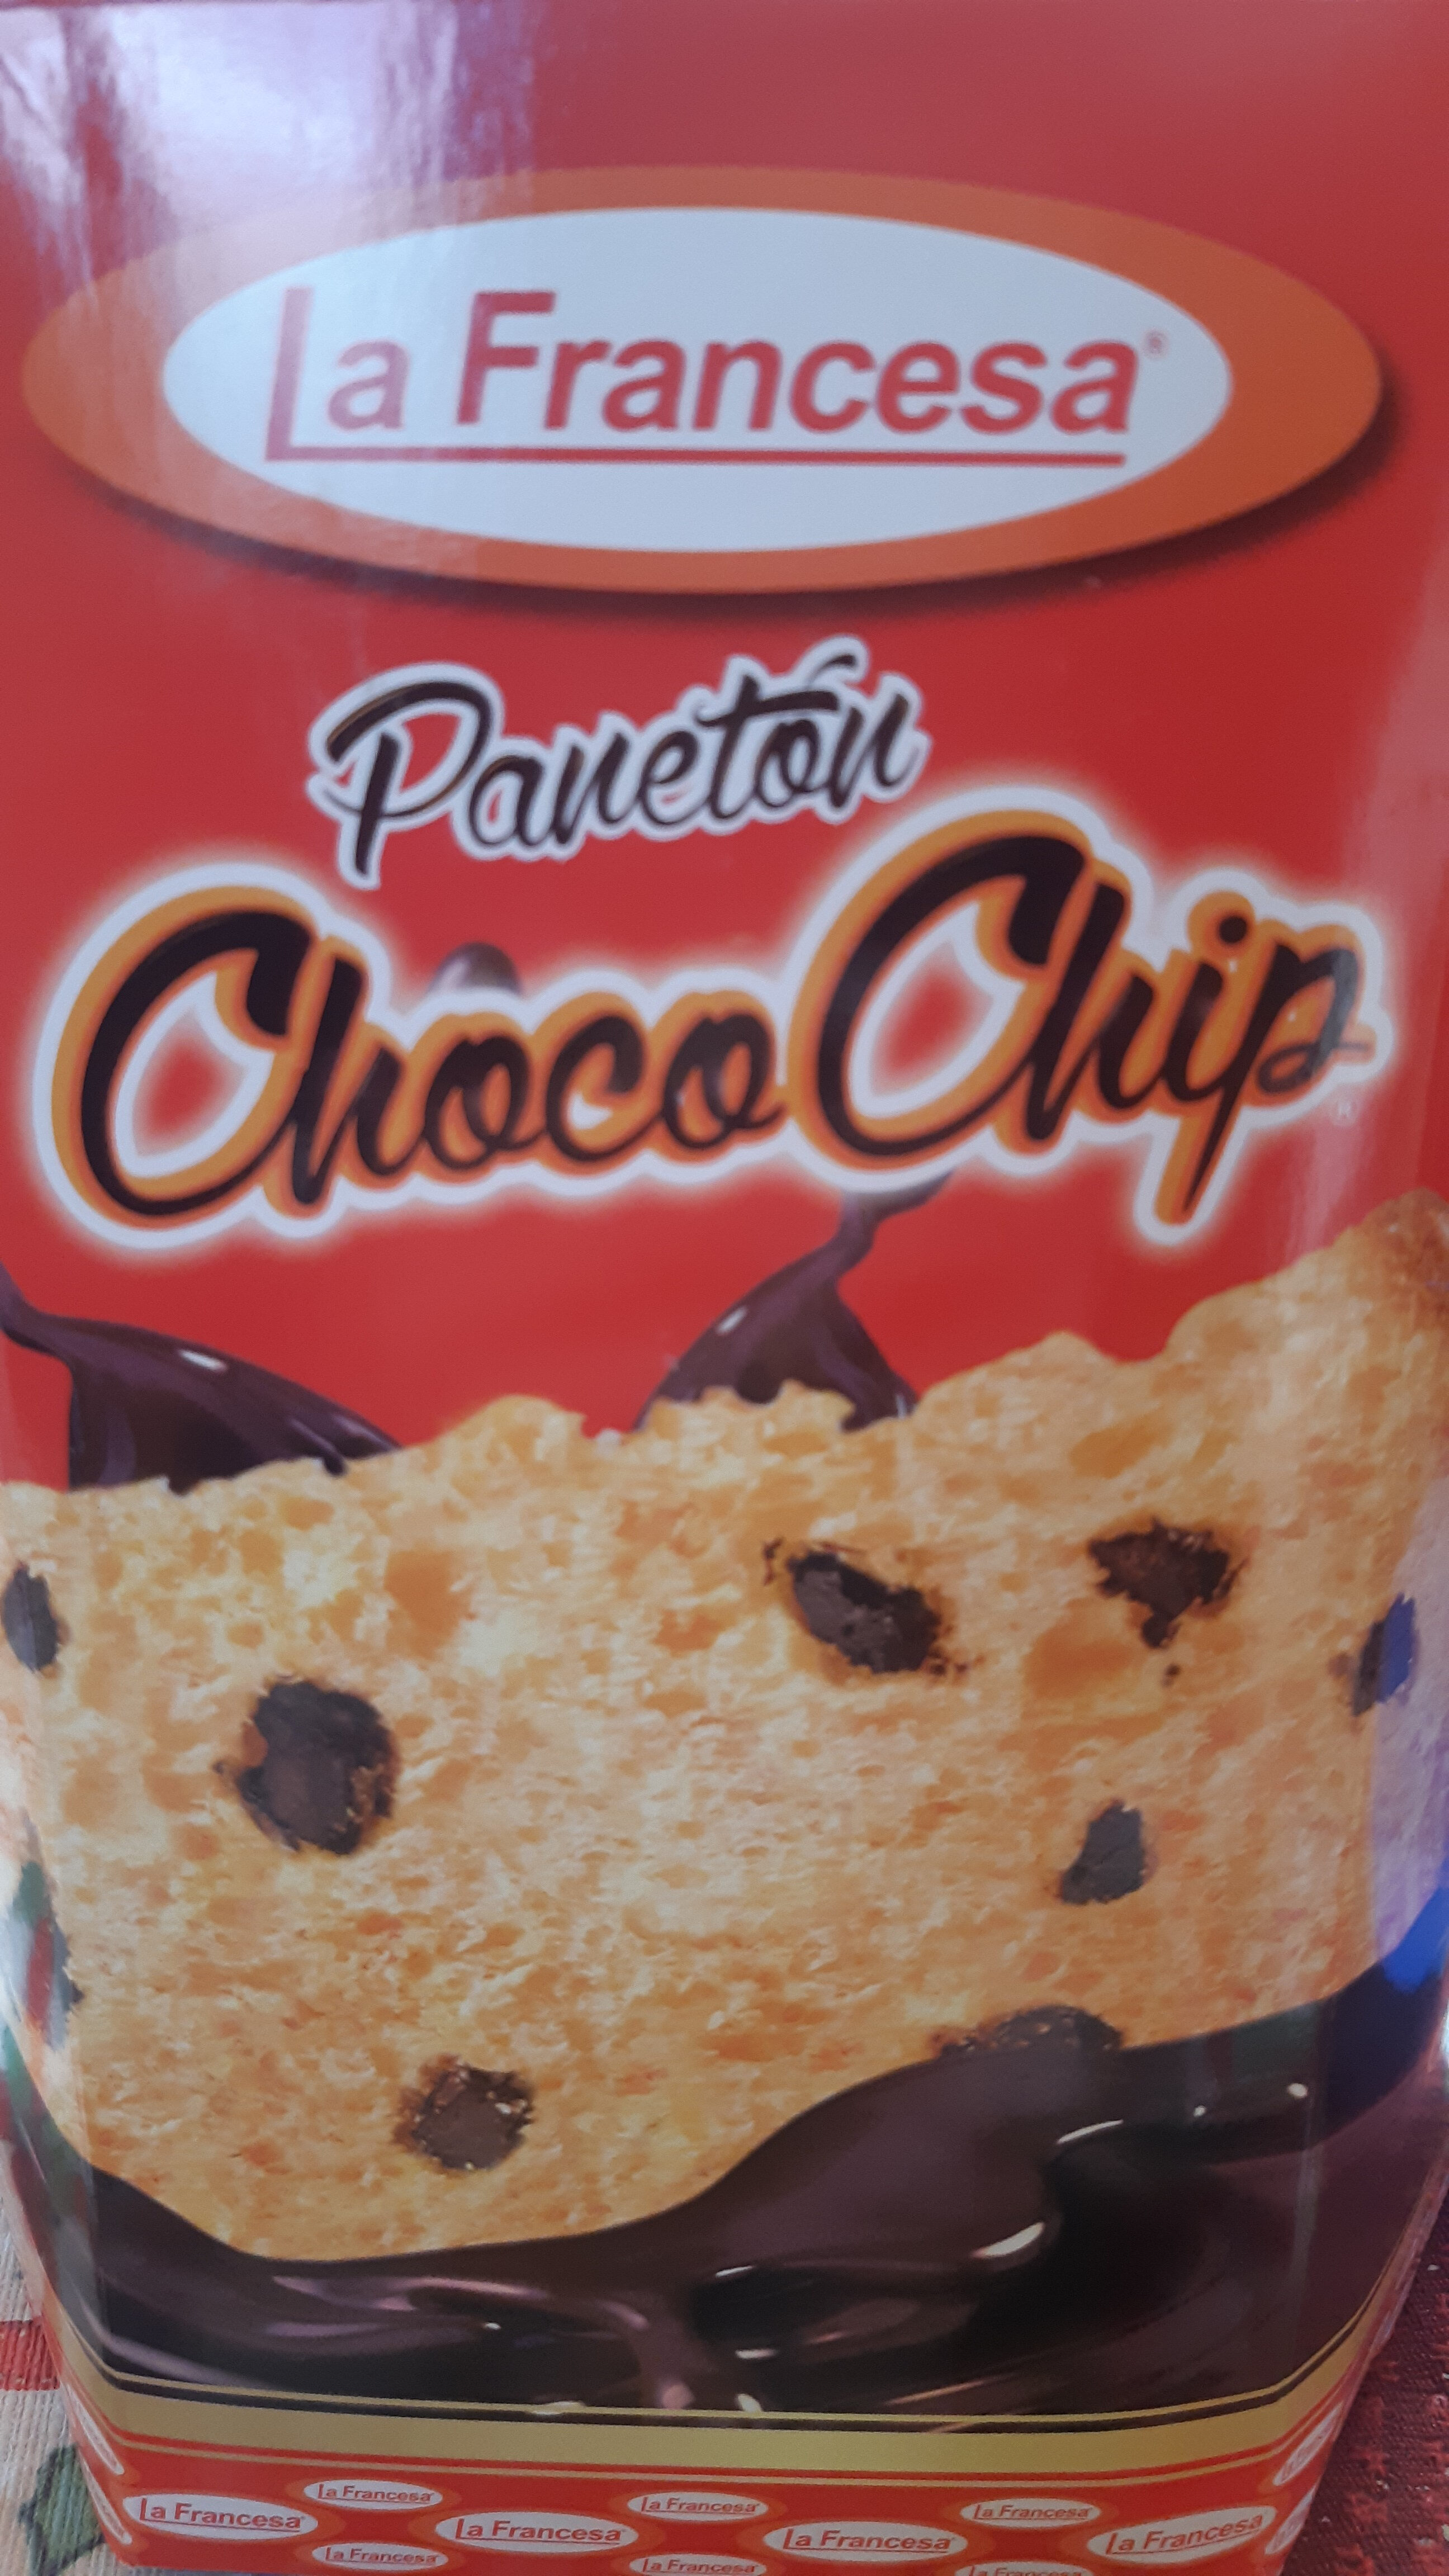 Panetón Chocochip - Product - es